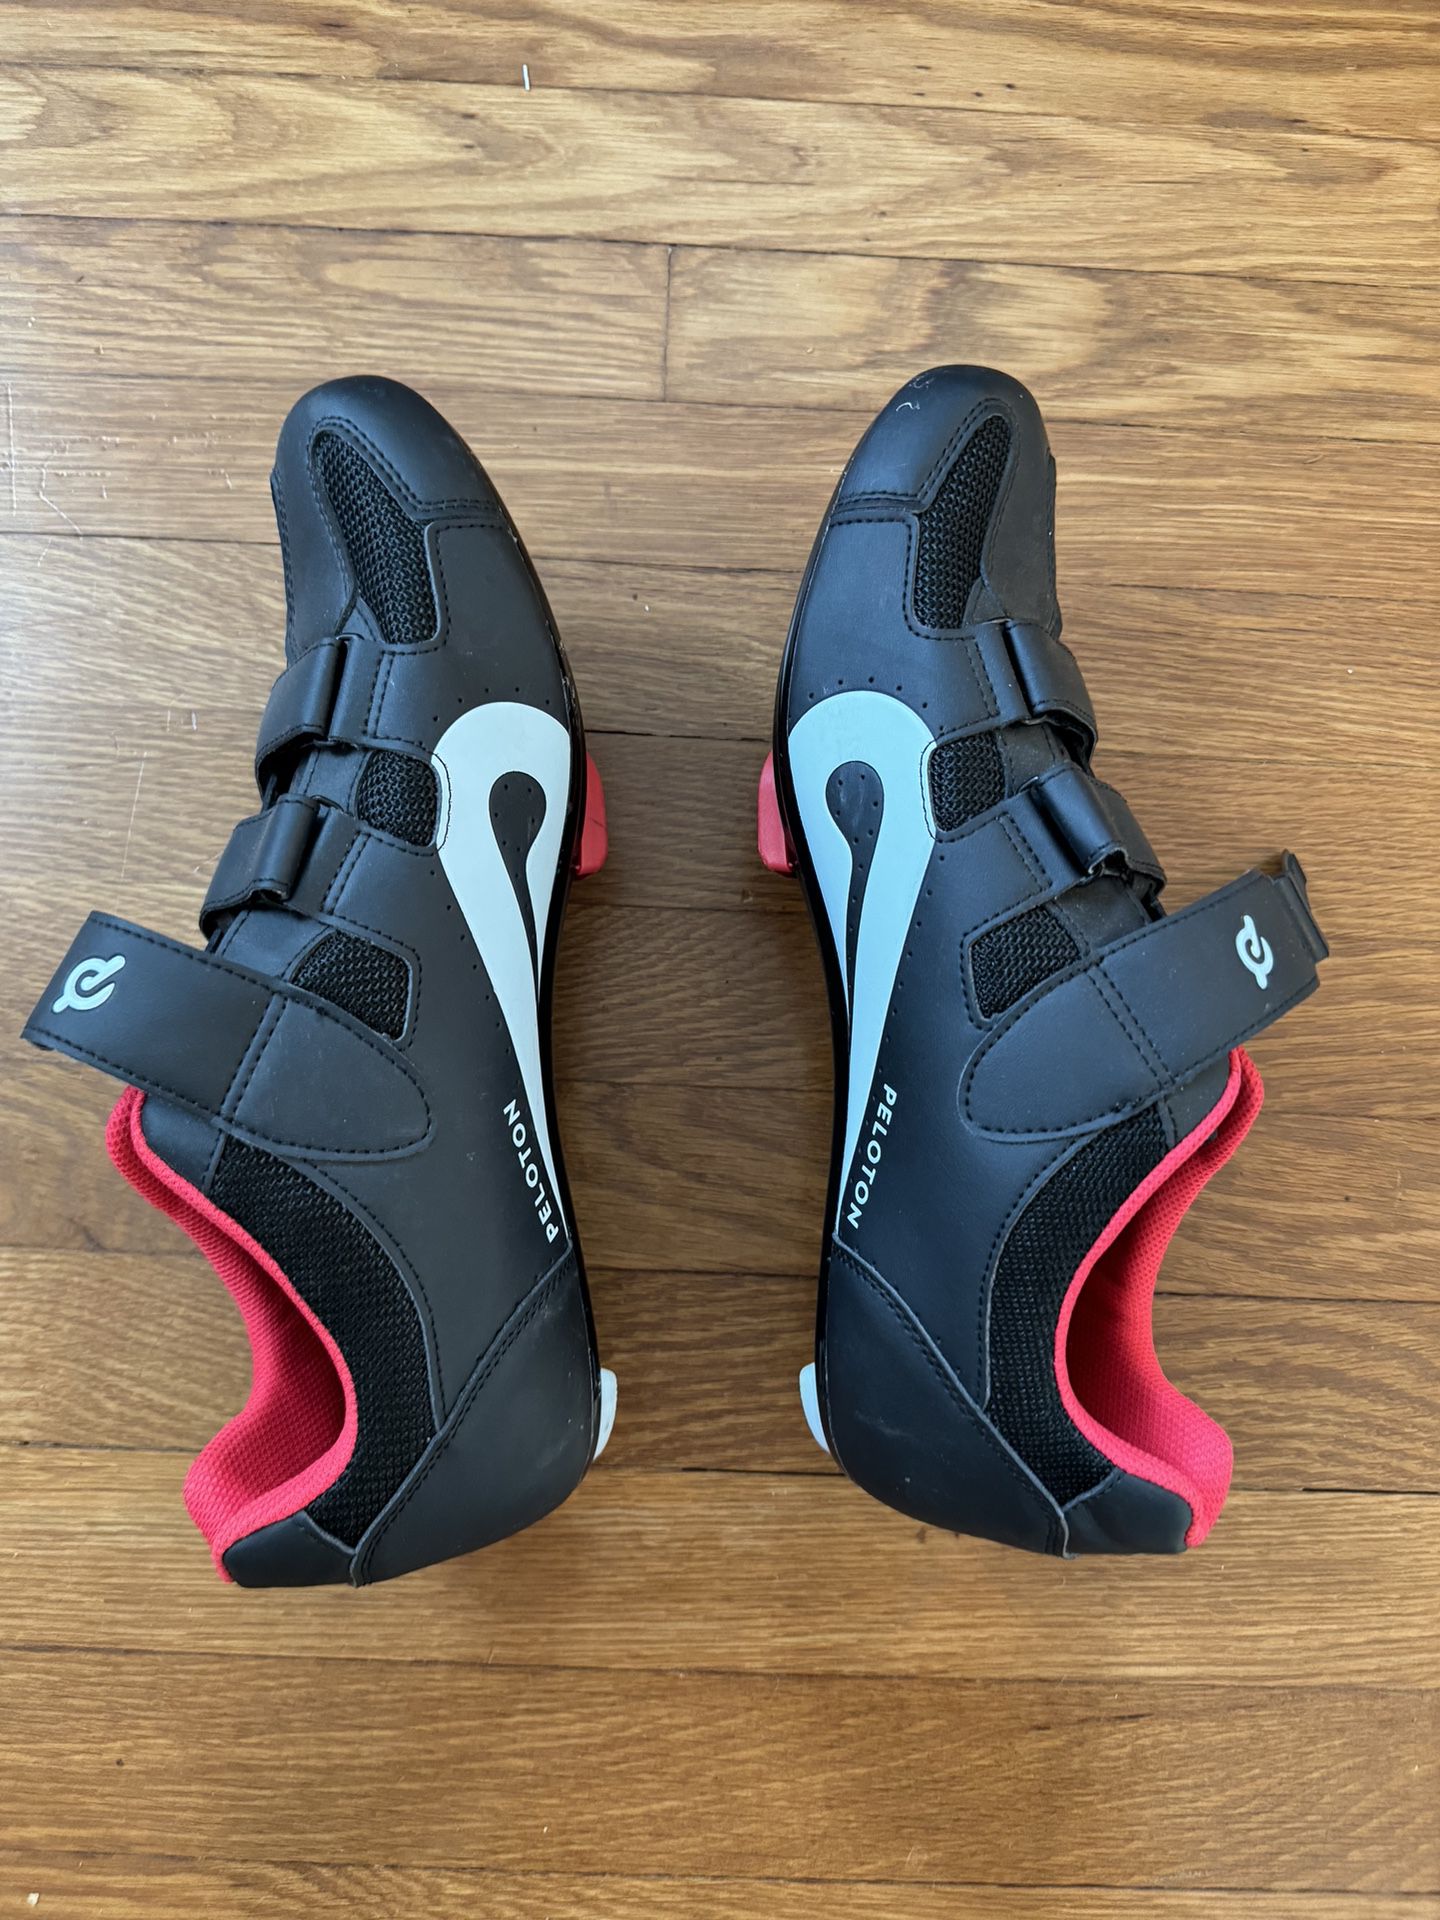 Men’s Peloton Cycling Shoes (size 13)